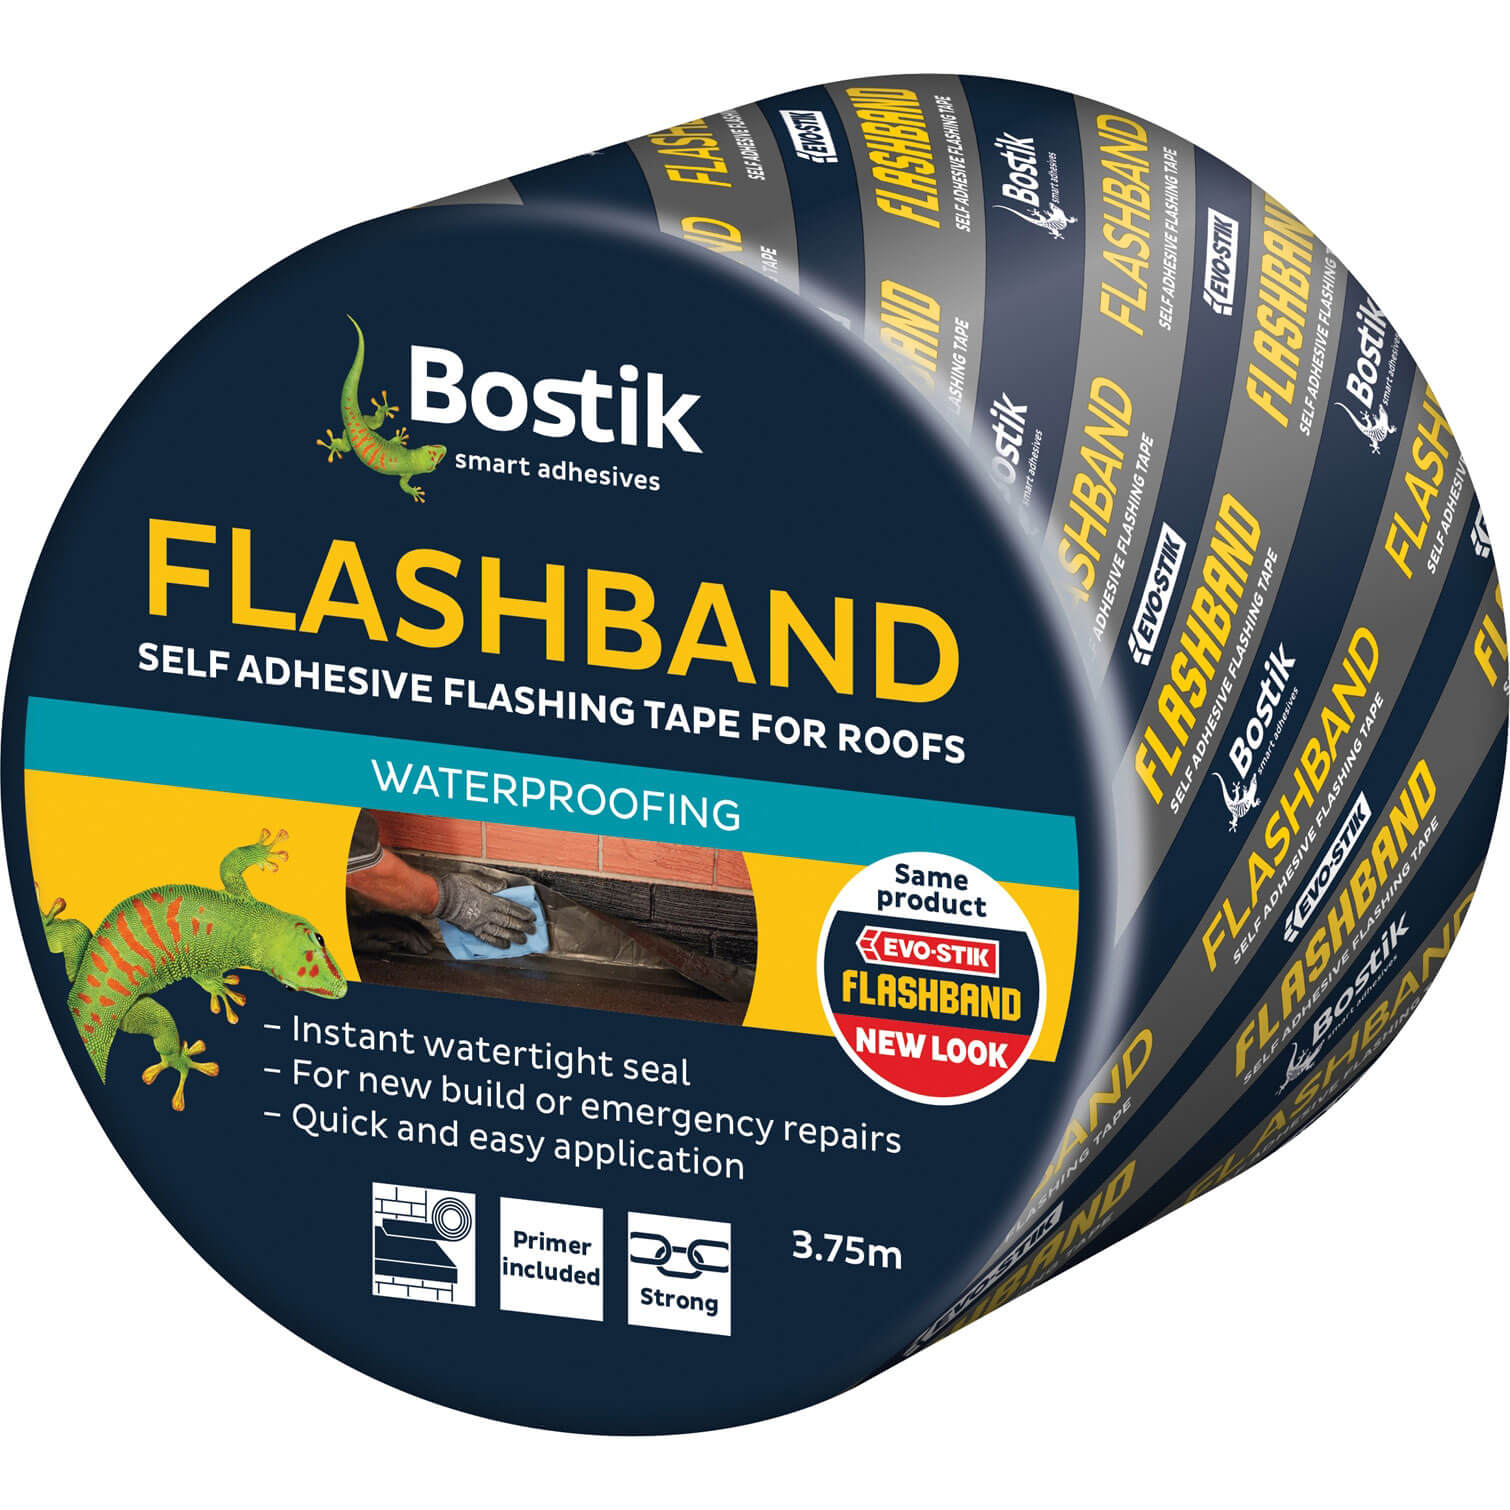 Image of Evo-stik Flashband and Primer 300mm 3.75m